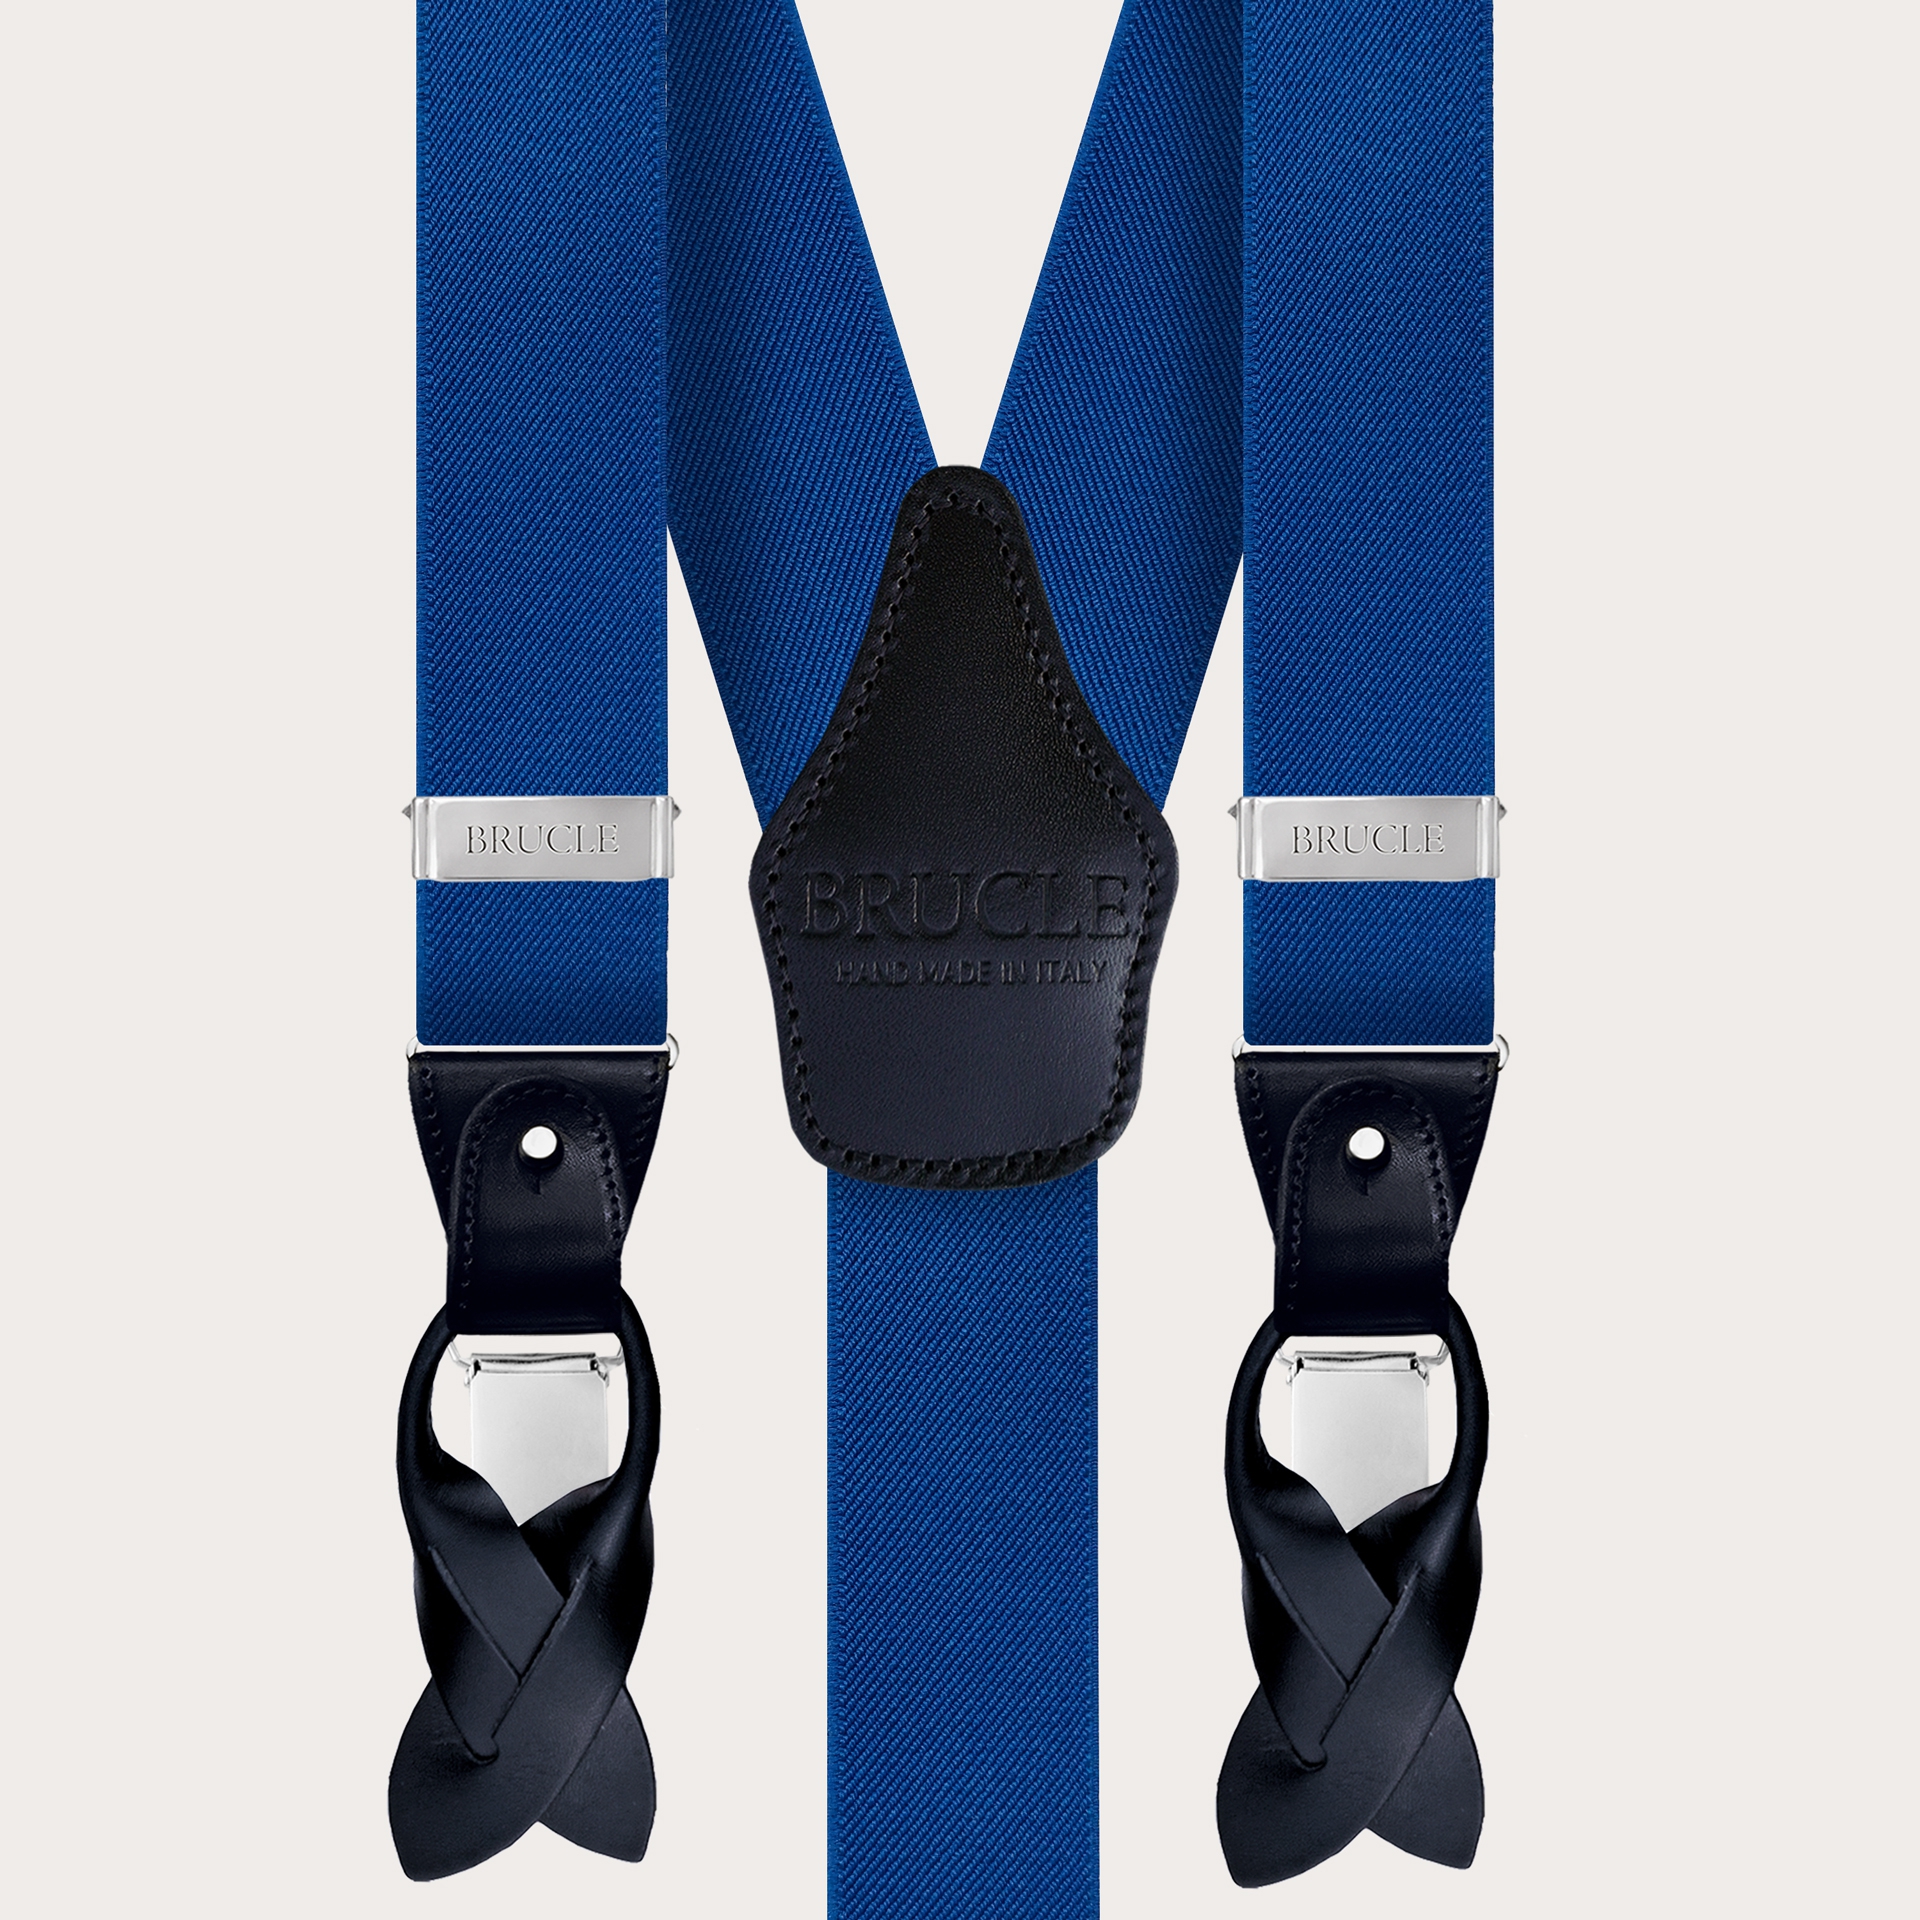 Buy SH Retail Men's Elastic Suspenders Belt (Navy Blue; Free Size) at